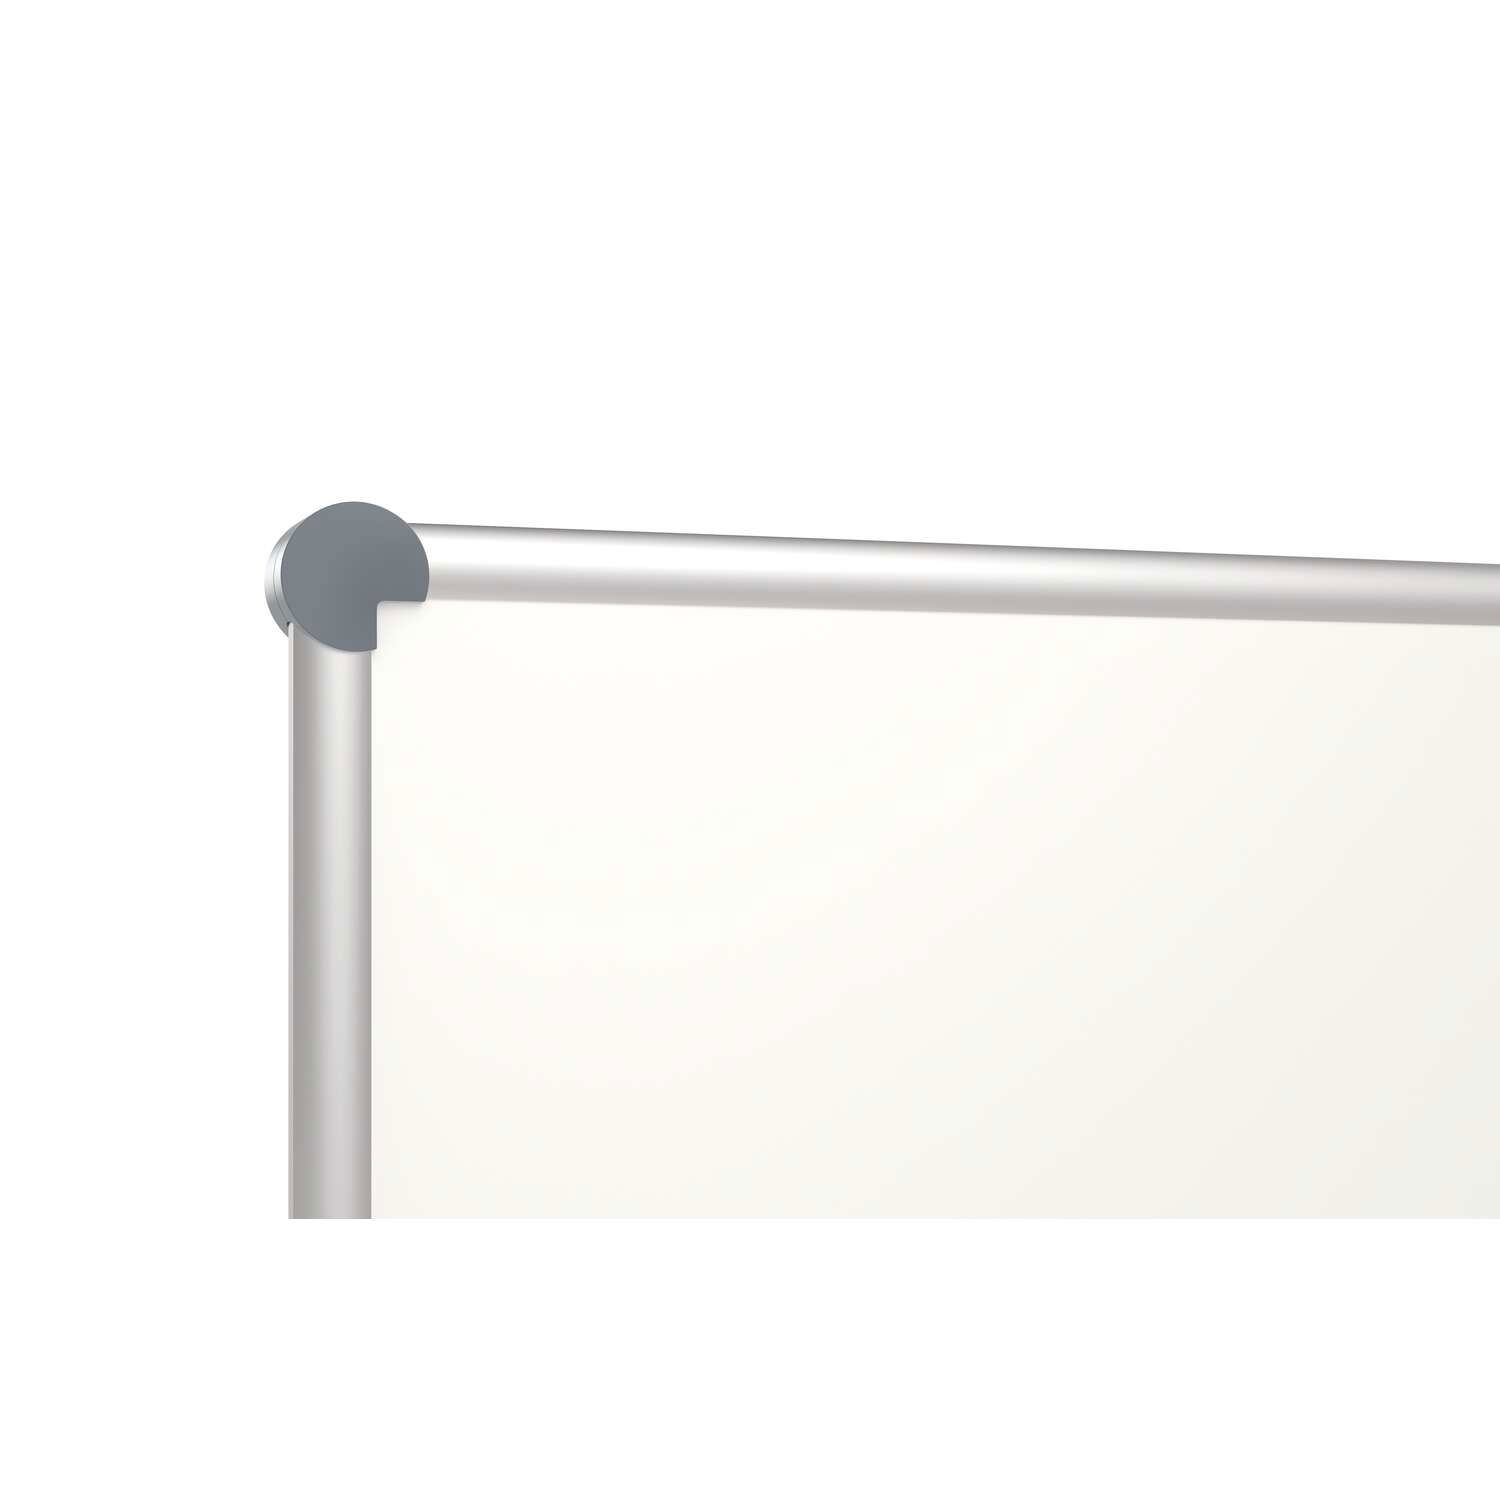 Mobiles Whiteboard MAULpro, drehbar, Emaille, 100x120 cm